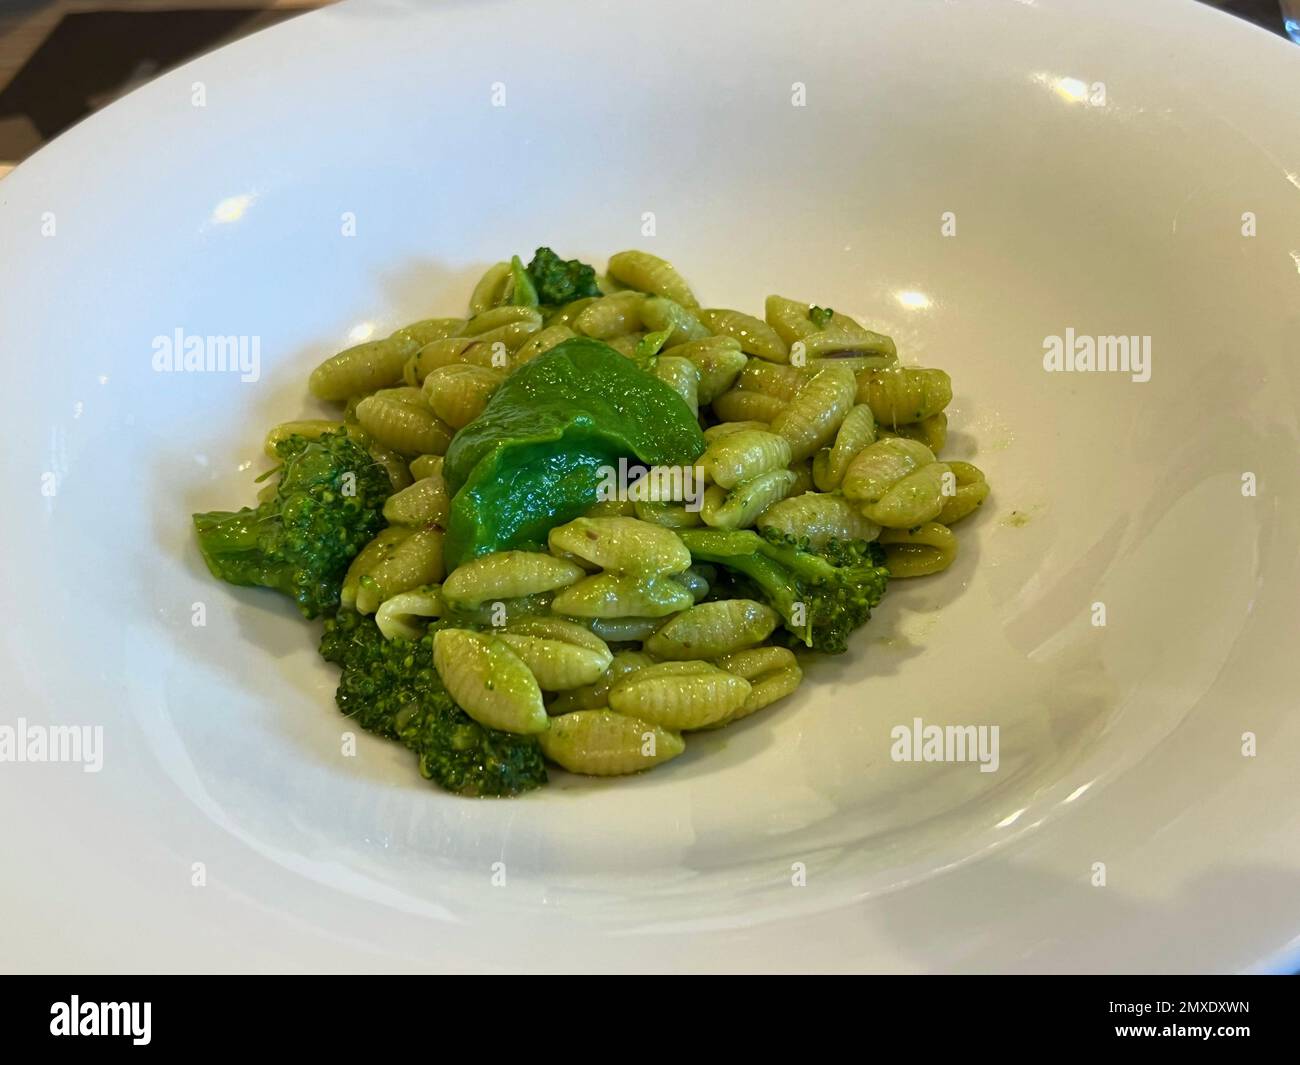 Sardinian gnocchi or malloreddus traditional Sardinian pasta topped with broccoli Stock Photo